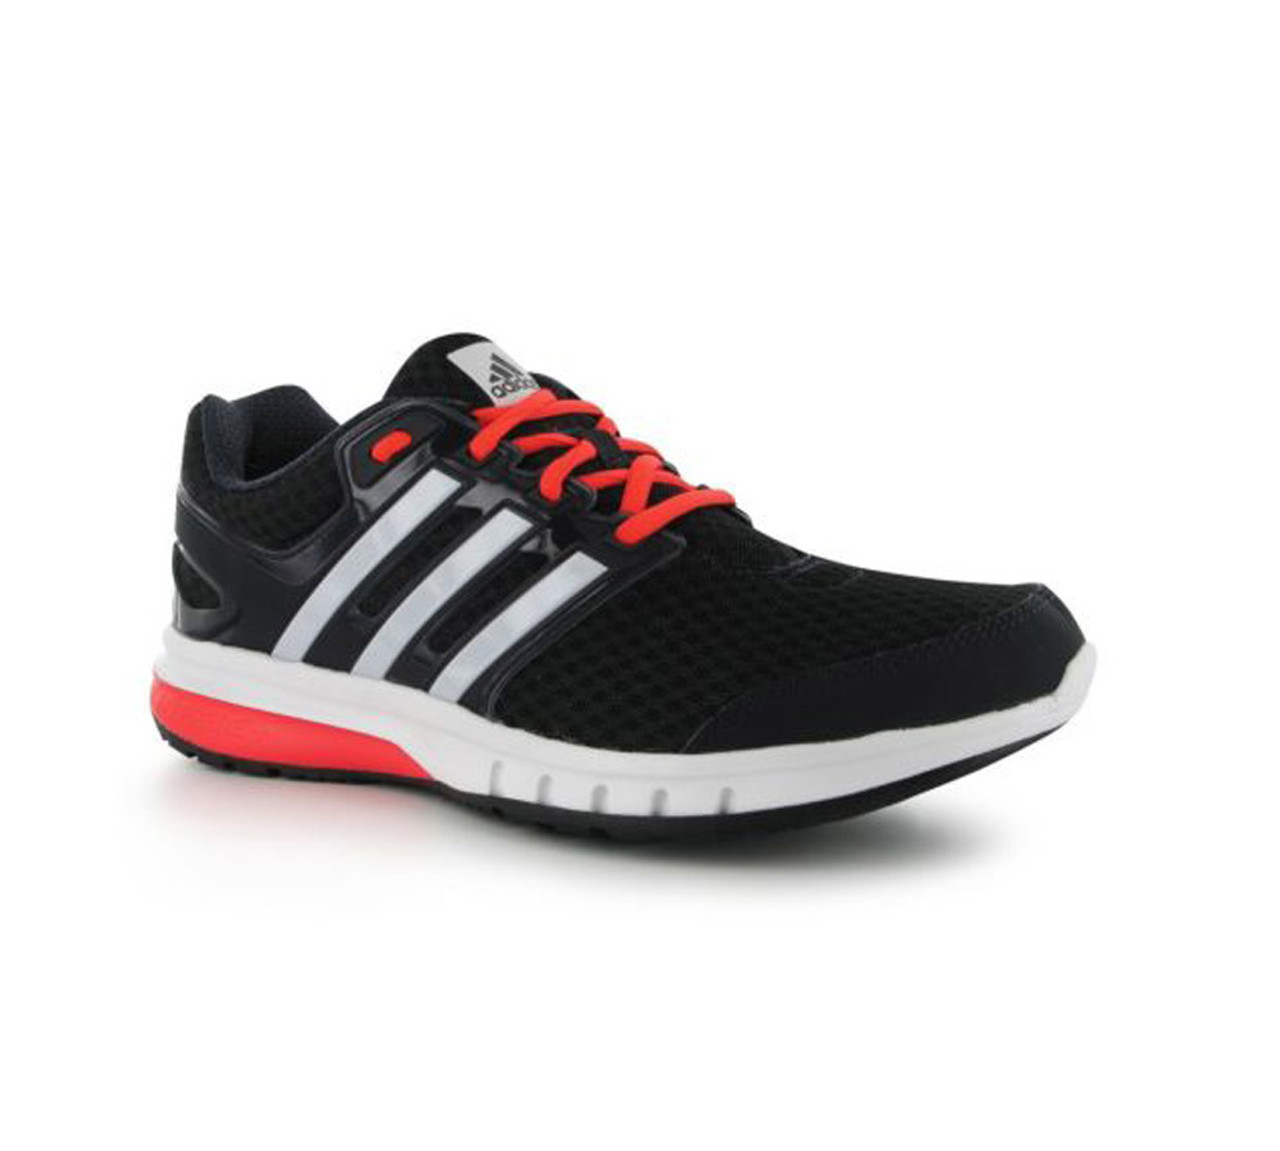 Men's Galaxy Elite FF Running Shoe - Black | Discount Adidas Athletic Shoes & More Shoolu.com | Shoolu.com